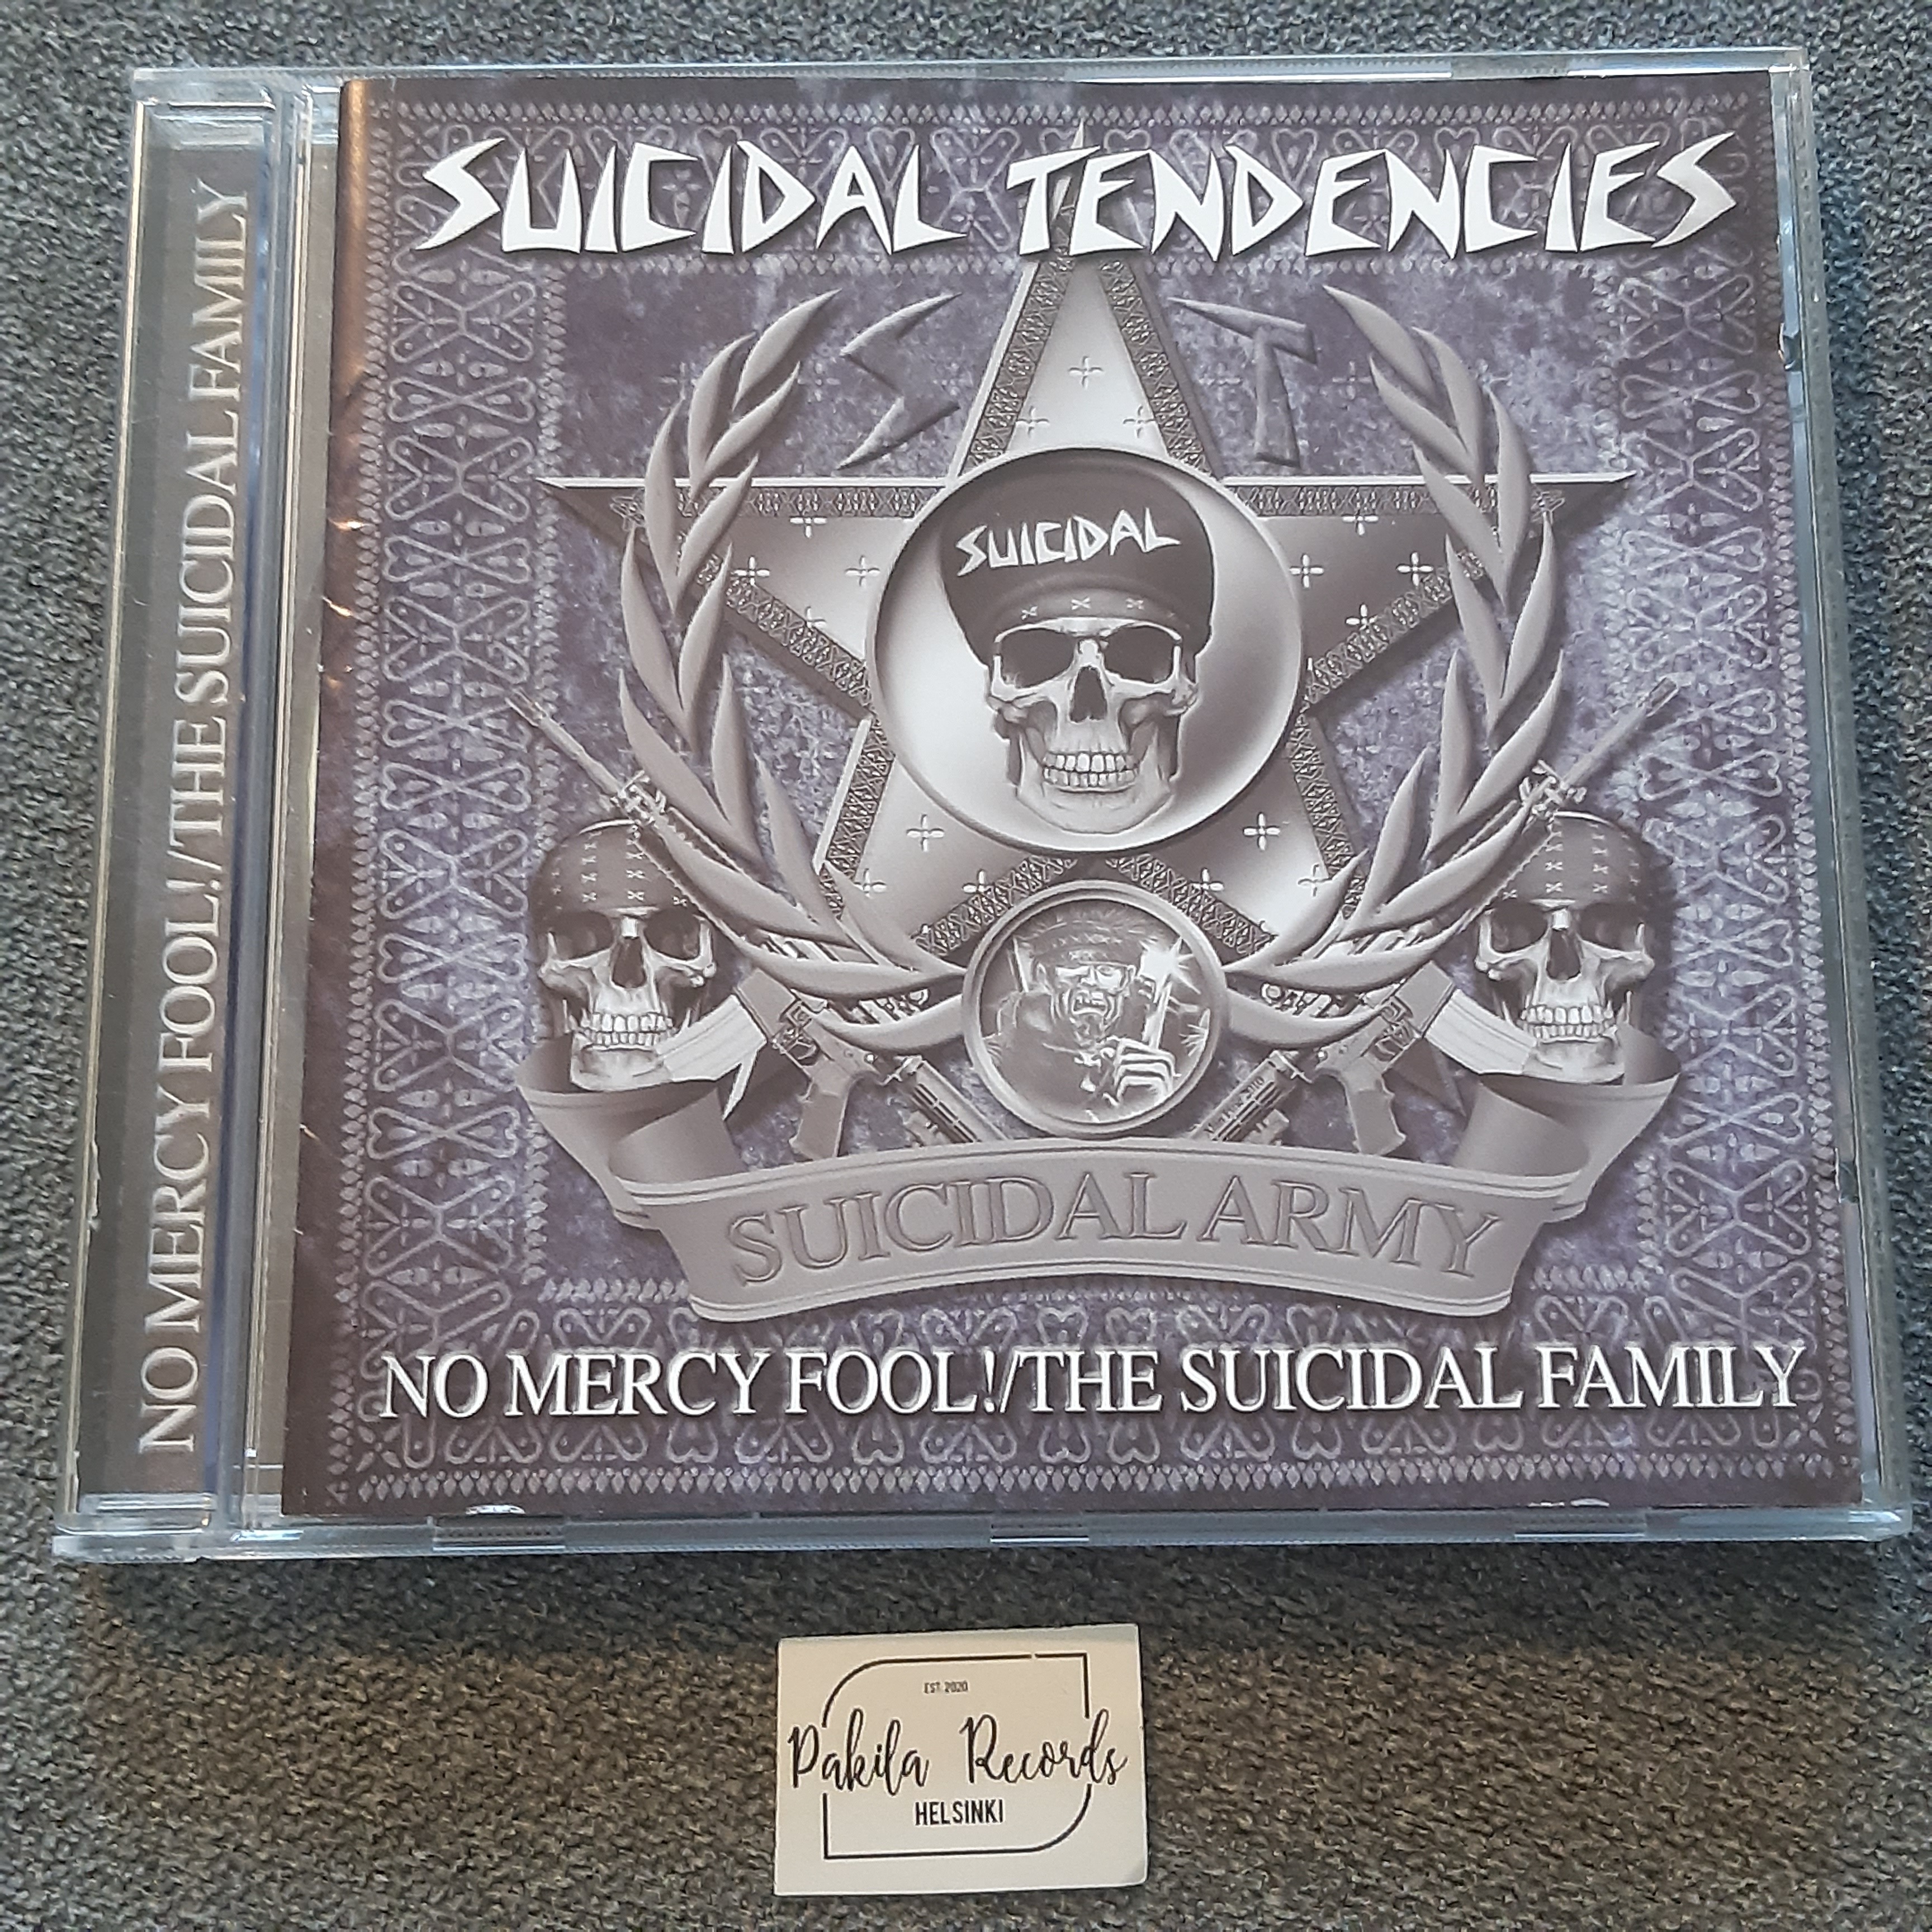 Suicidal Tendencies - No Mercy Fool! / The Suicidal Family - CD (käytetty)